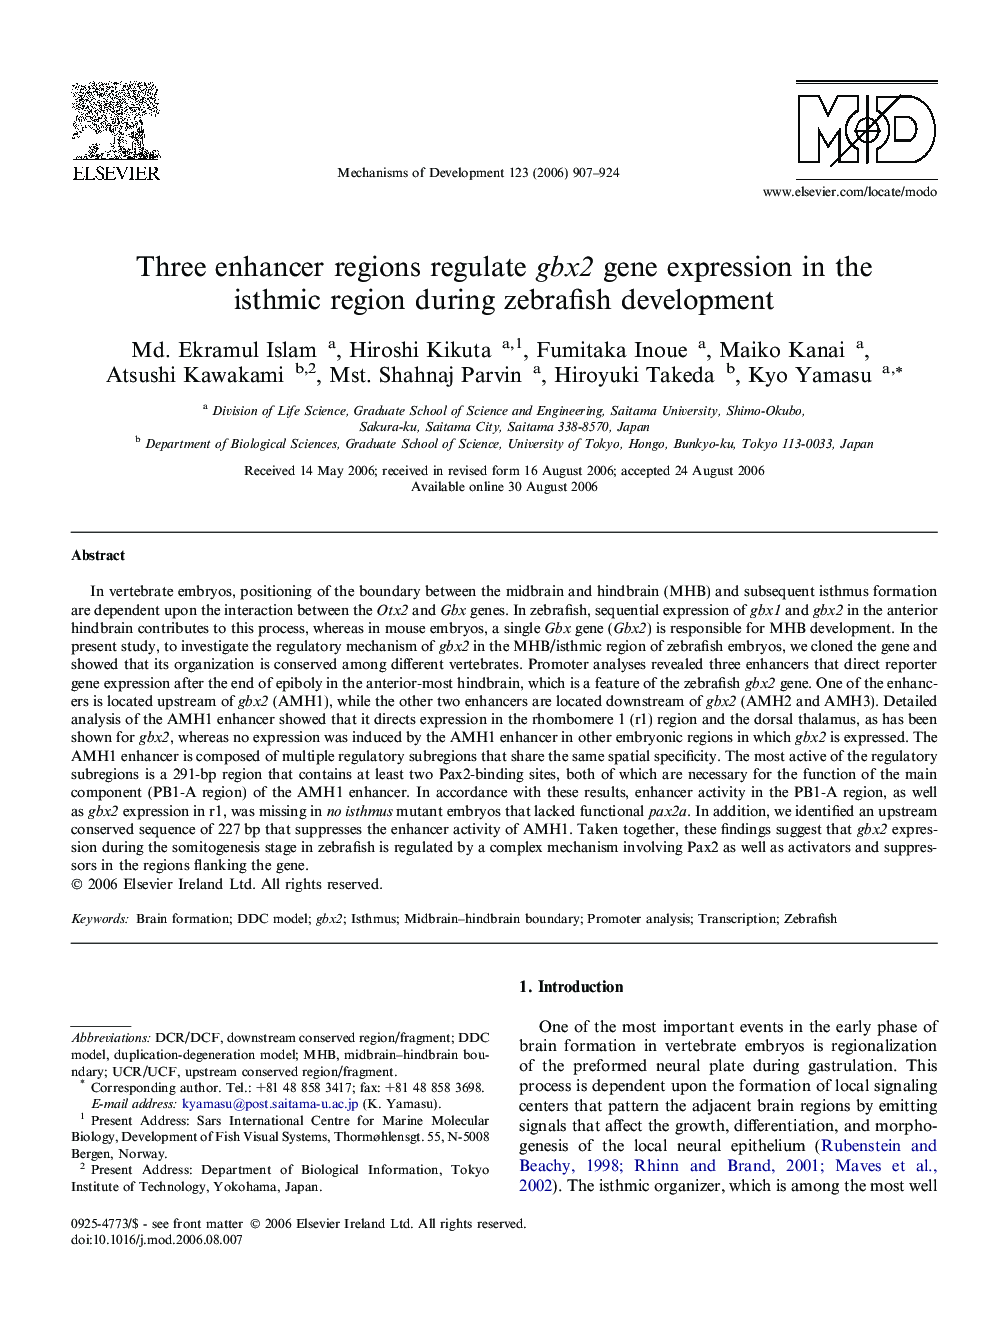 Three enhancer regions regulate gbx2 gene expression in the isthmic region during zebrafish development